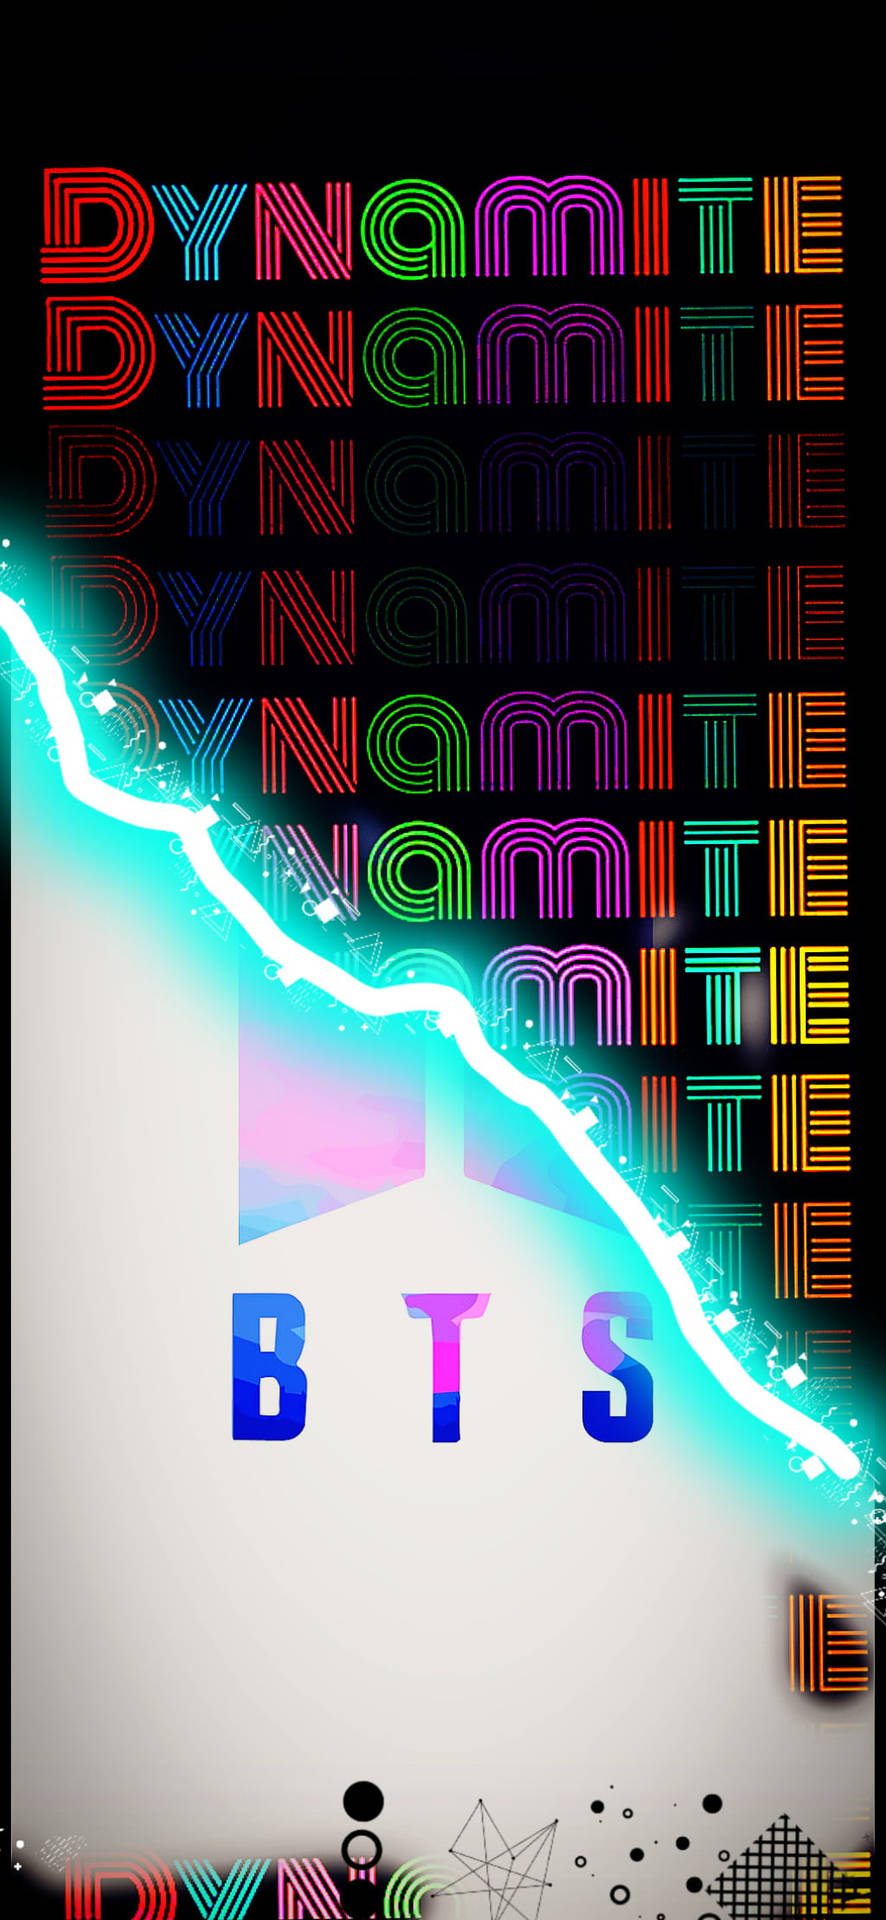 Cool Bts Dynamite Transition Effect Wallpaper